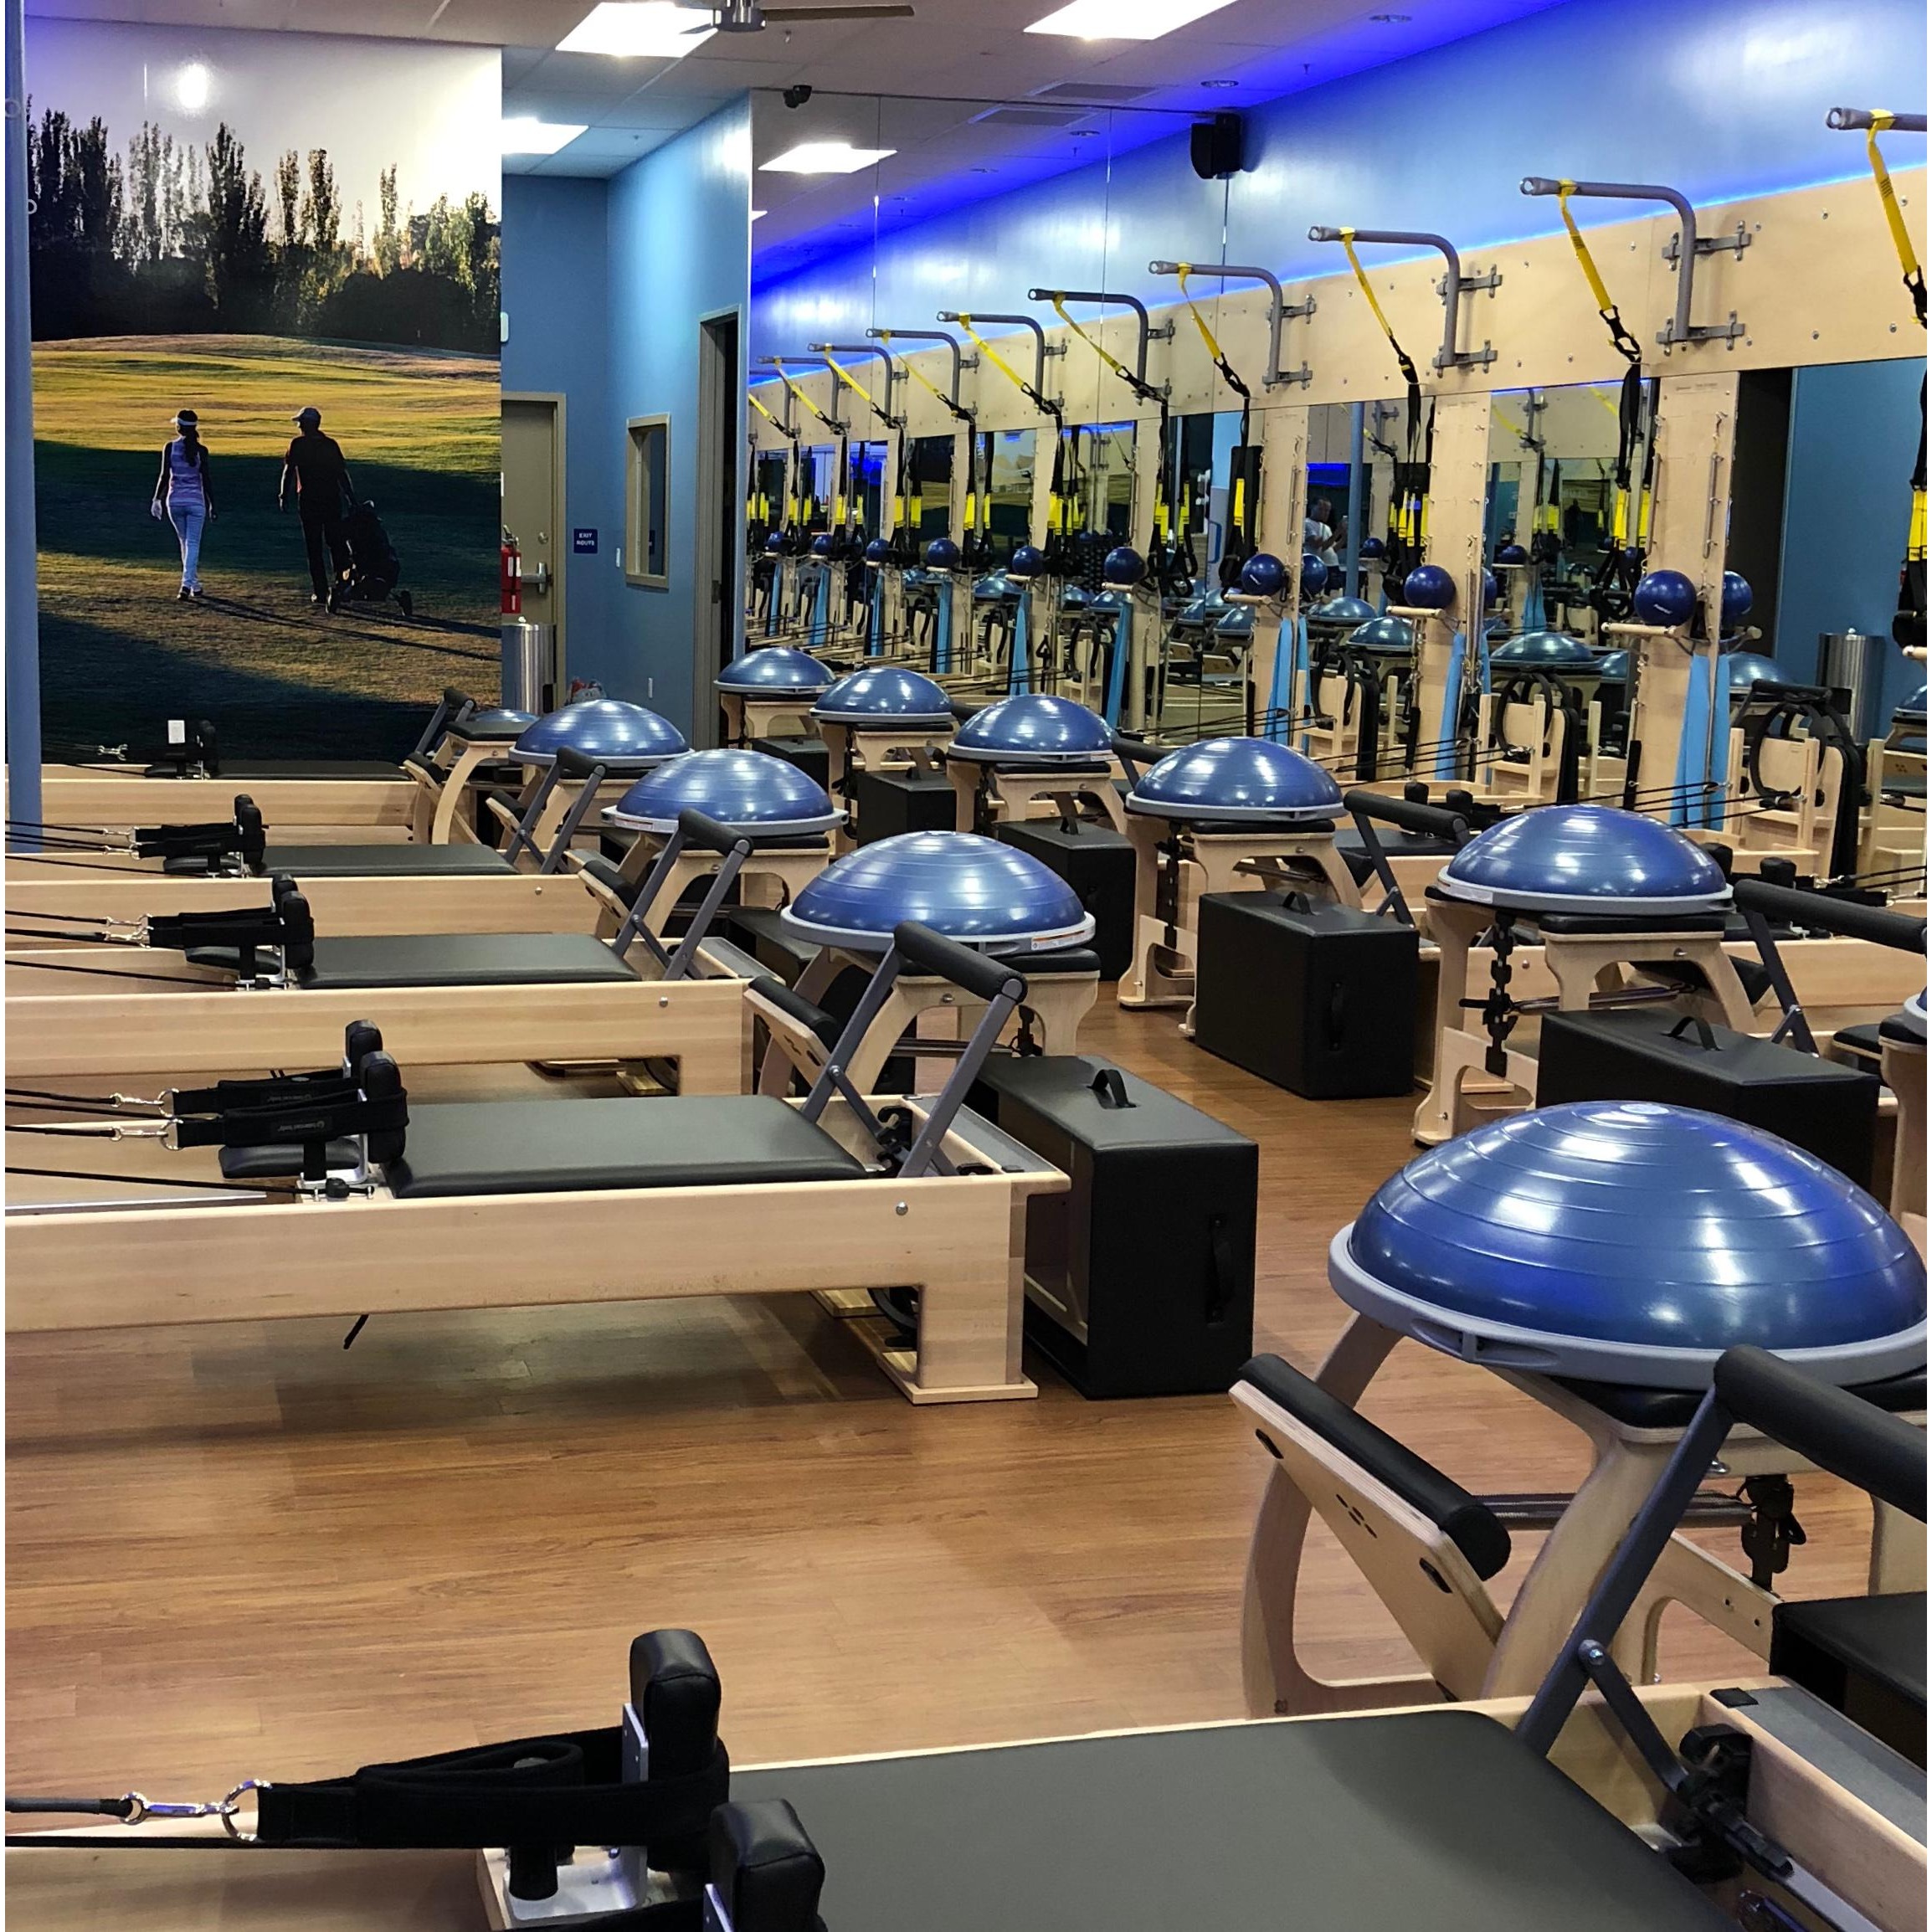 Club Pilates to open locations in Fullerton, Brea – Orange County Register